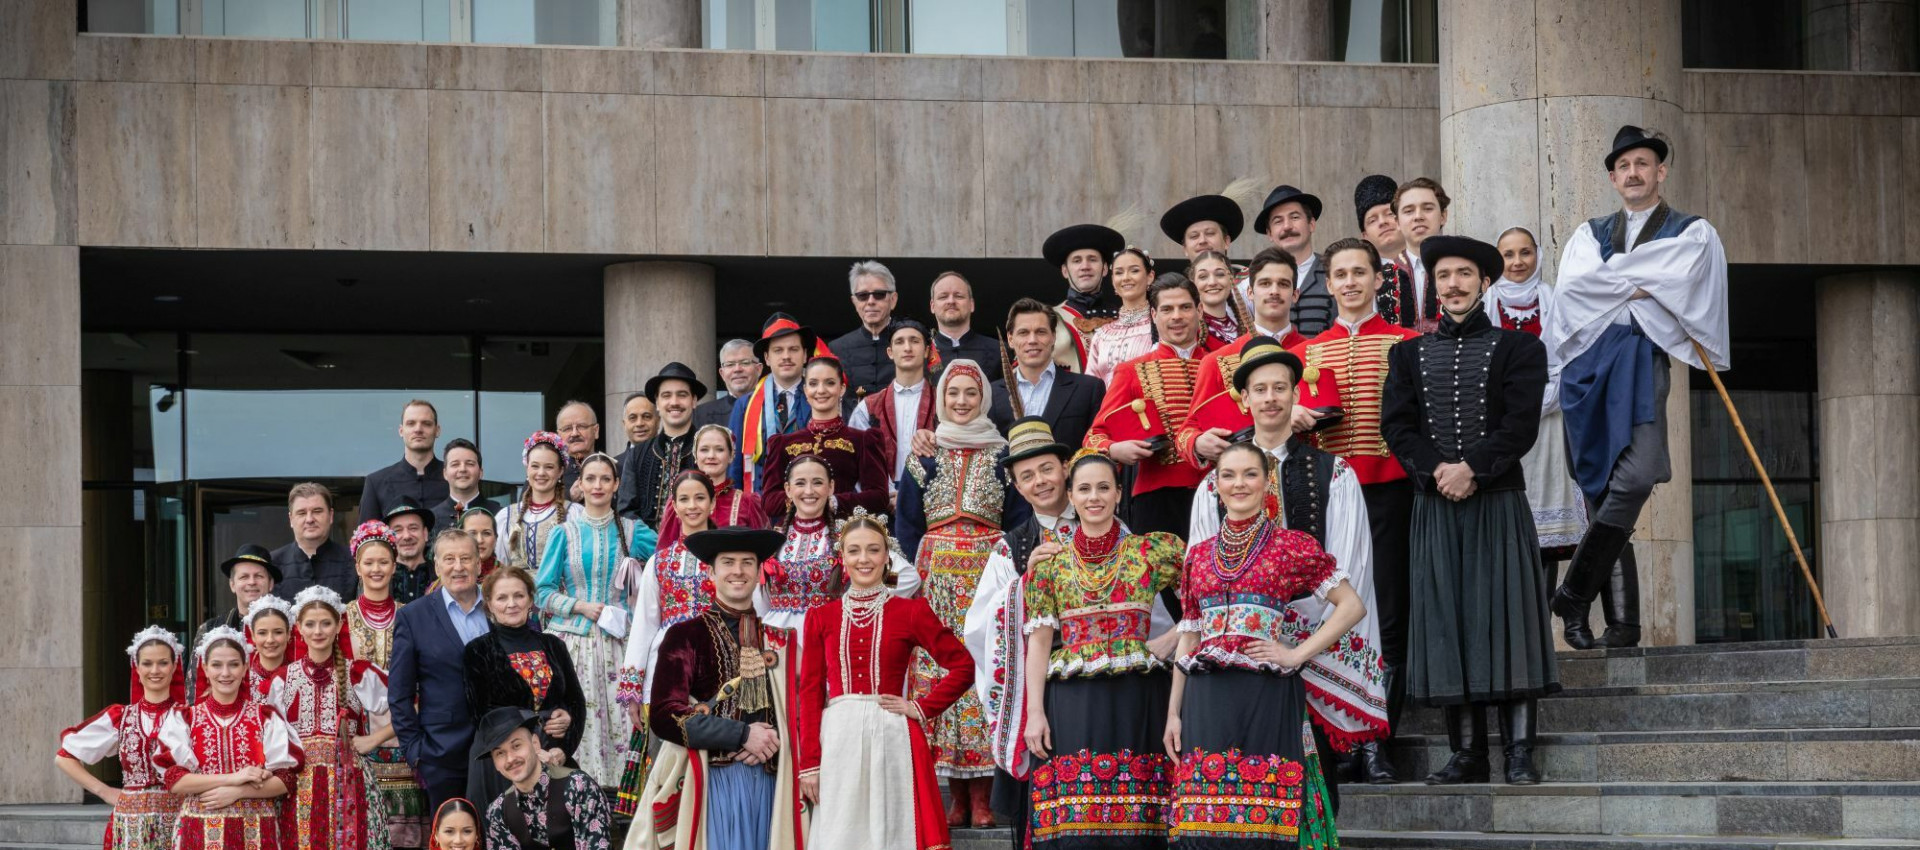 Hungarian National Dance Ensemble: Castles, Warriors, Frontiers - premiere